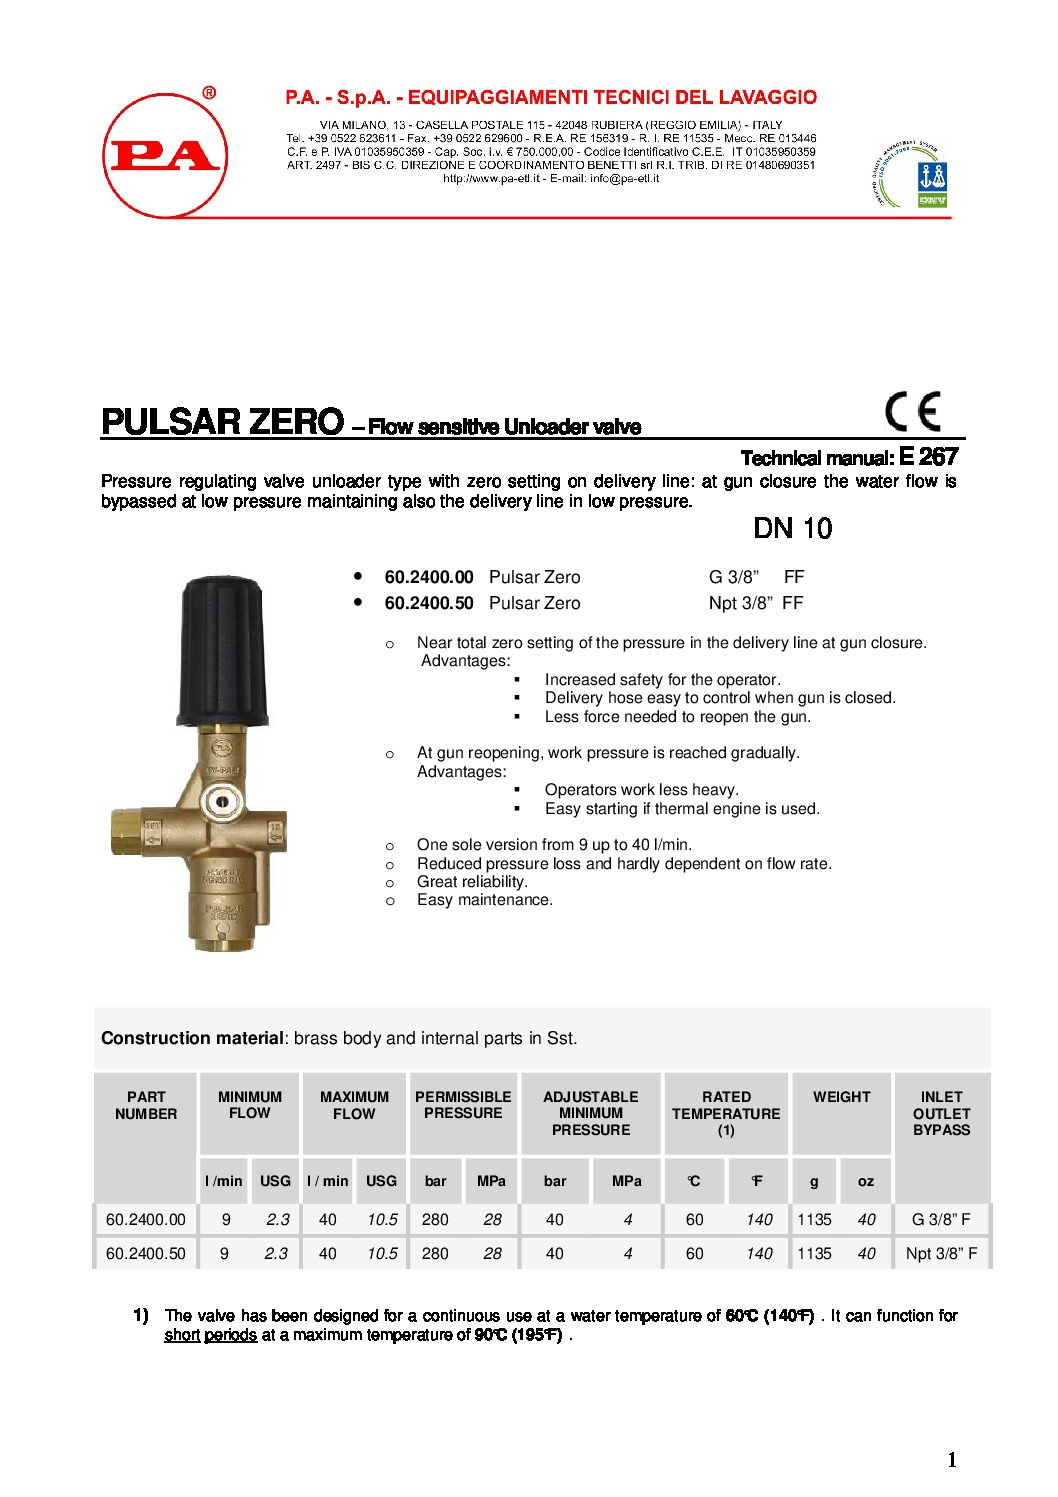 PA Pulsar Zero Unloader technical manual